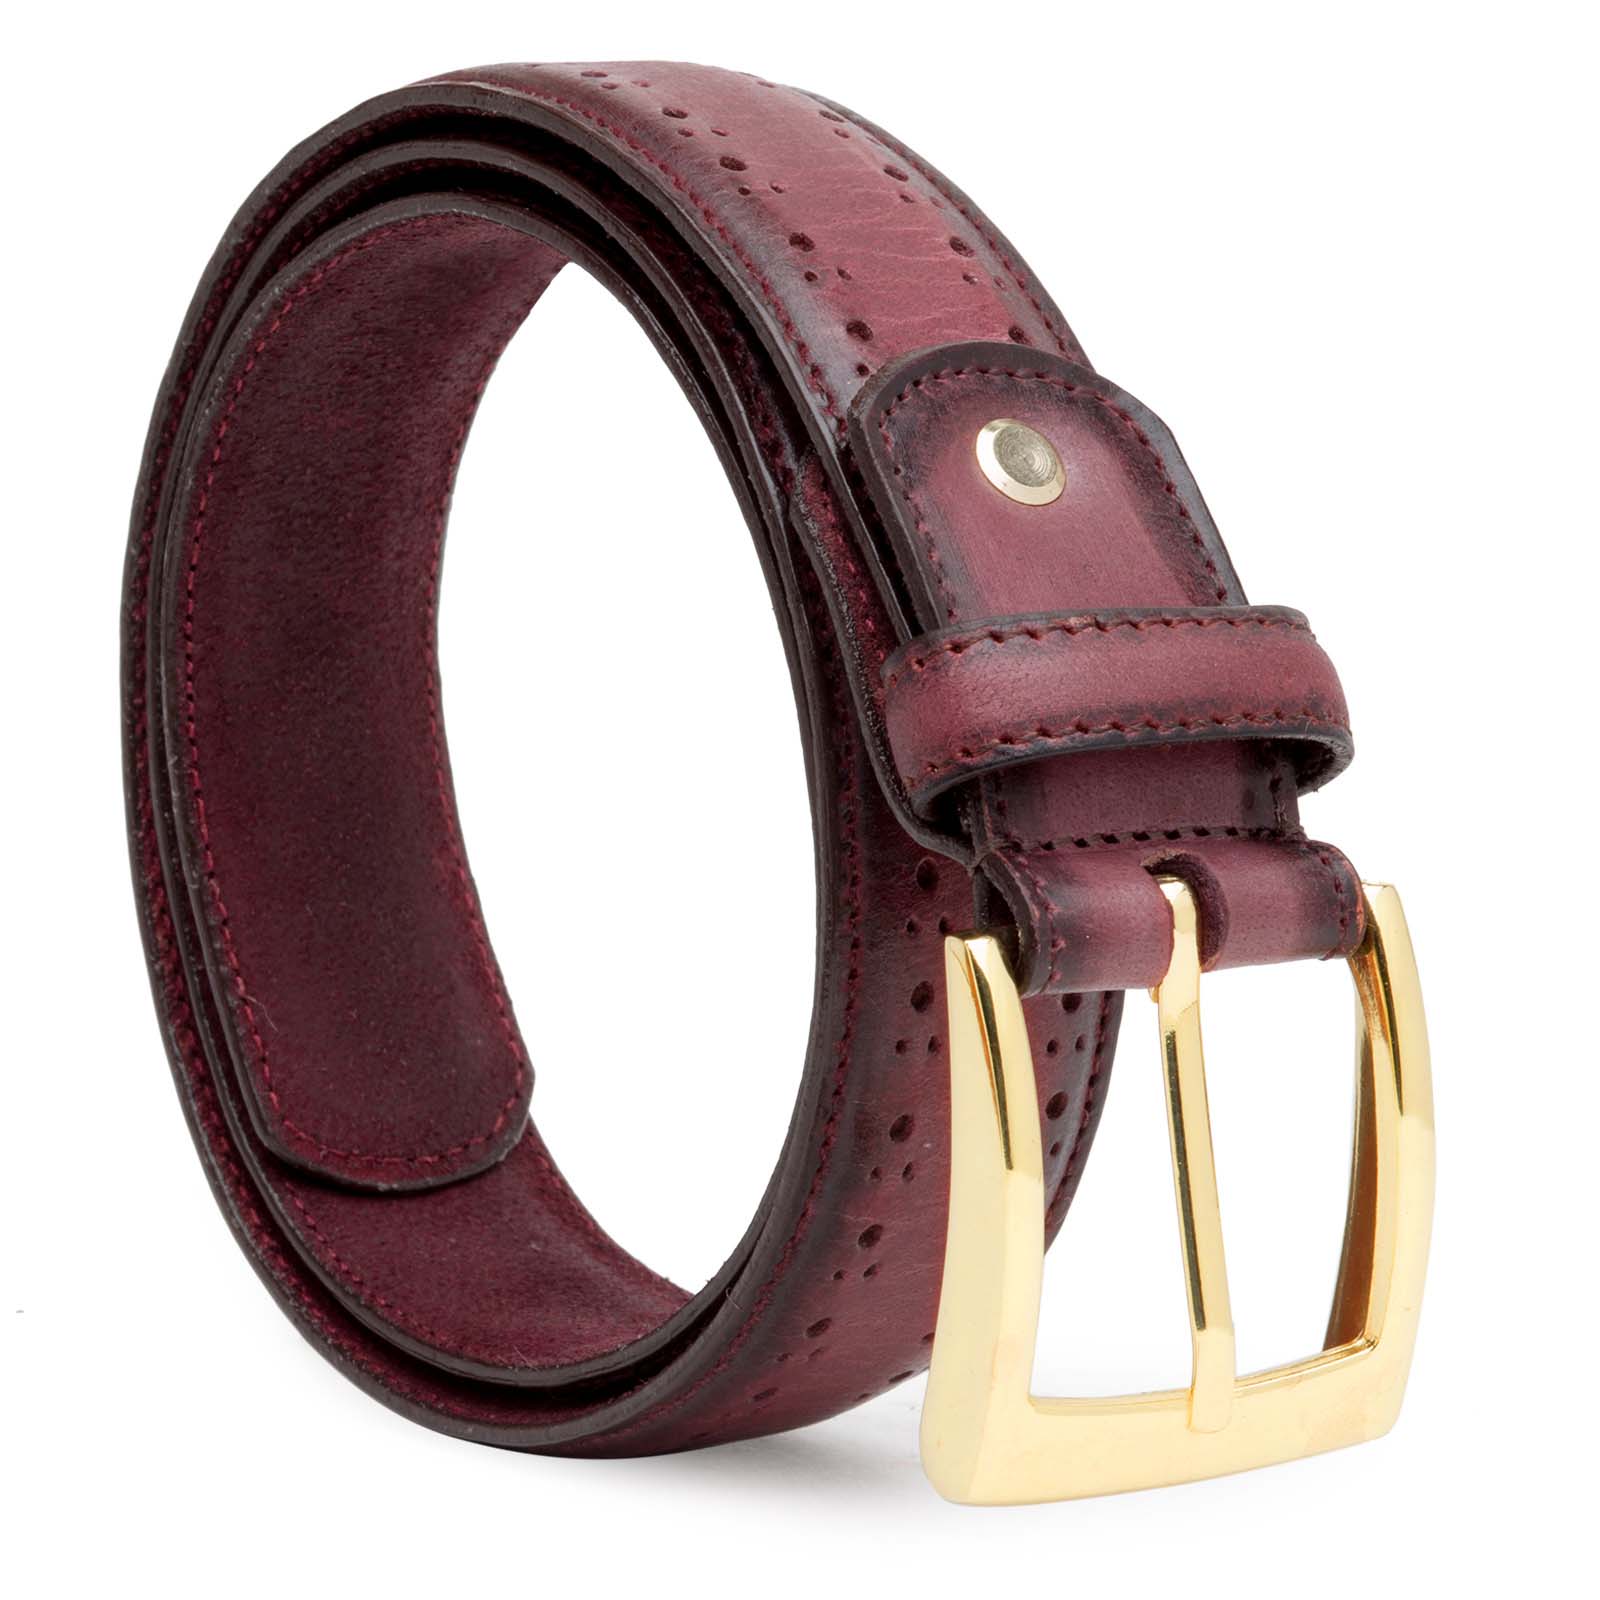 Wine burnished Brogue Leather belt